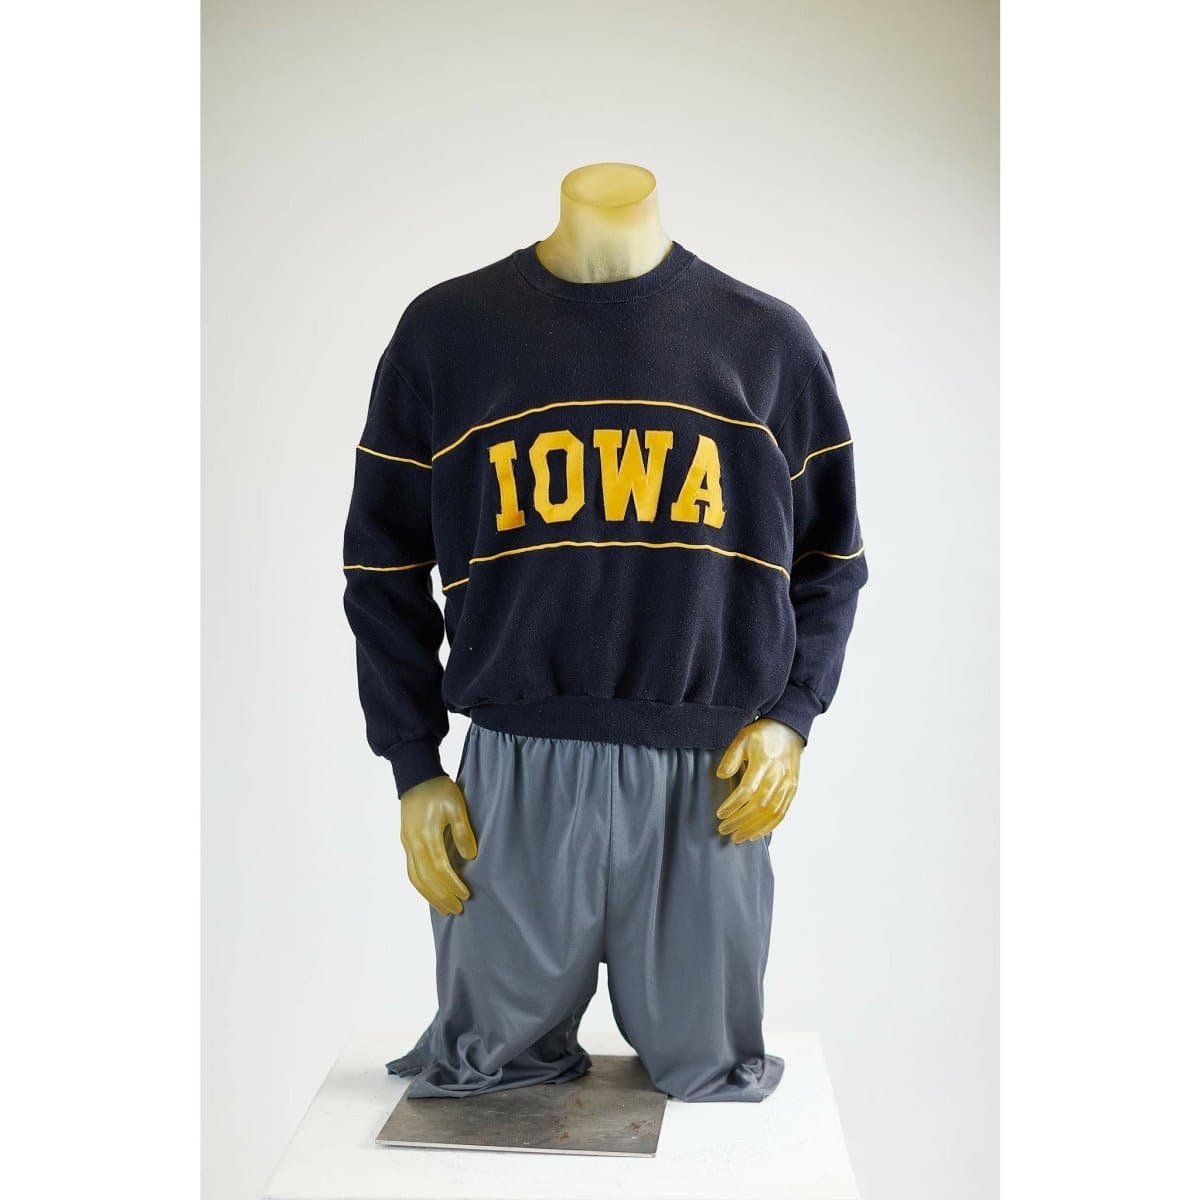 Gameday Grails Sweater Small Vintage Iowa Hawkeyes Nutmeg Mills Sweatshirt